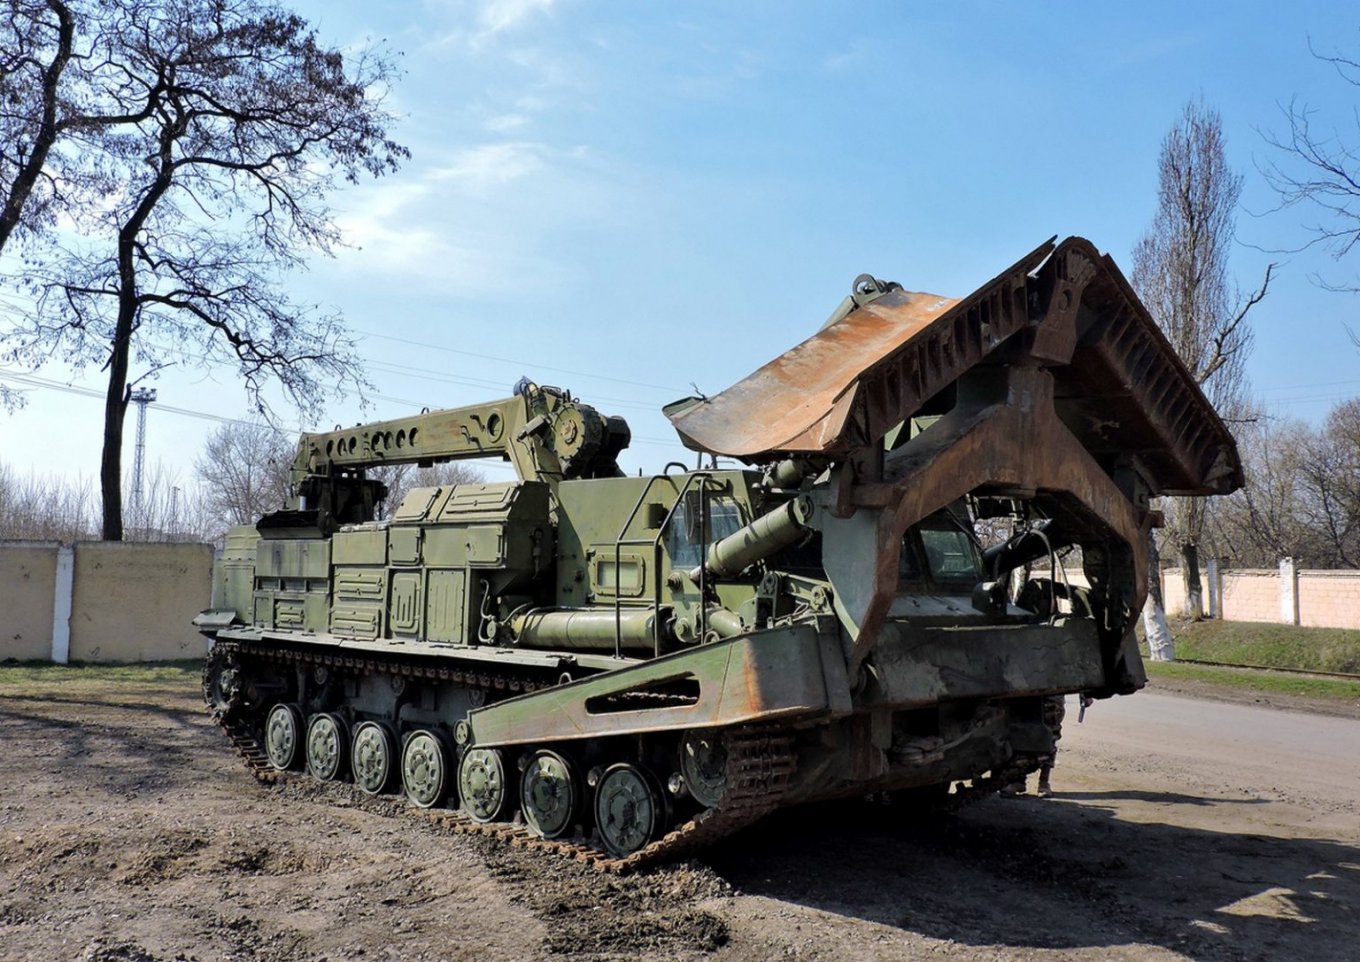 BAT-2 Destroyed Ukraine's Artillery (Video) | Express